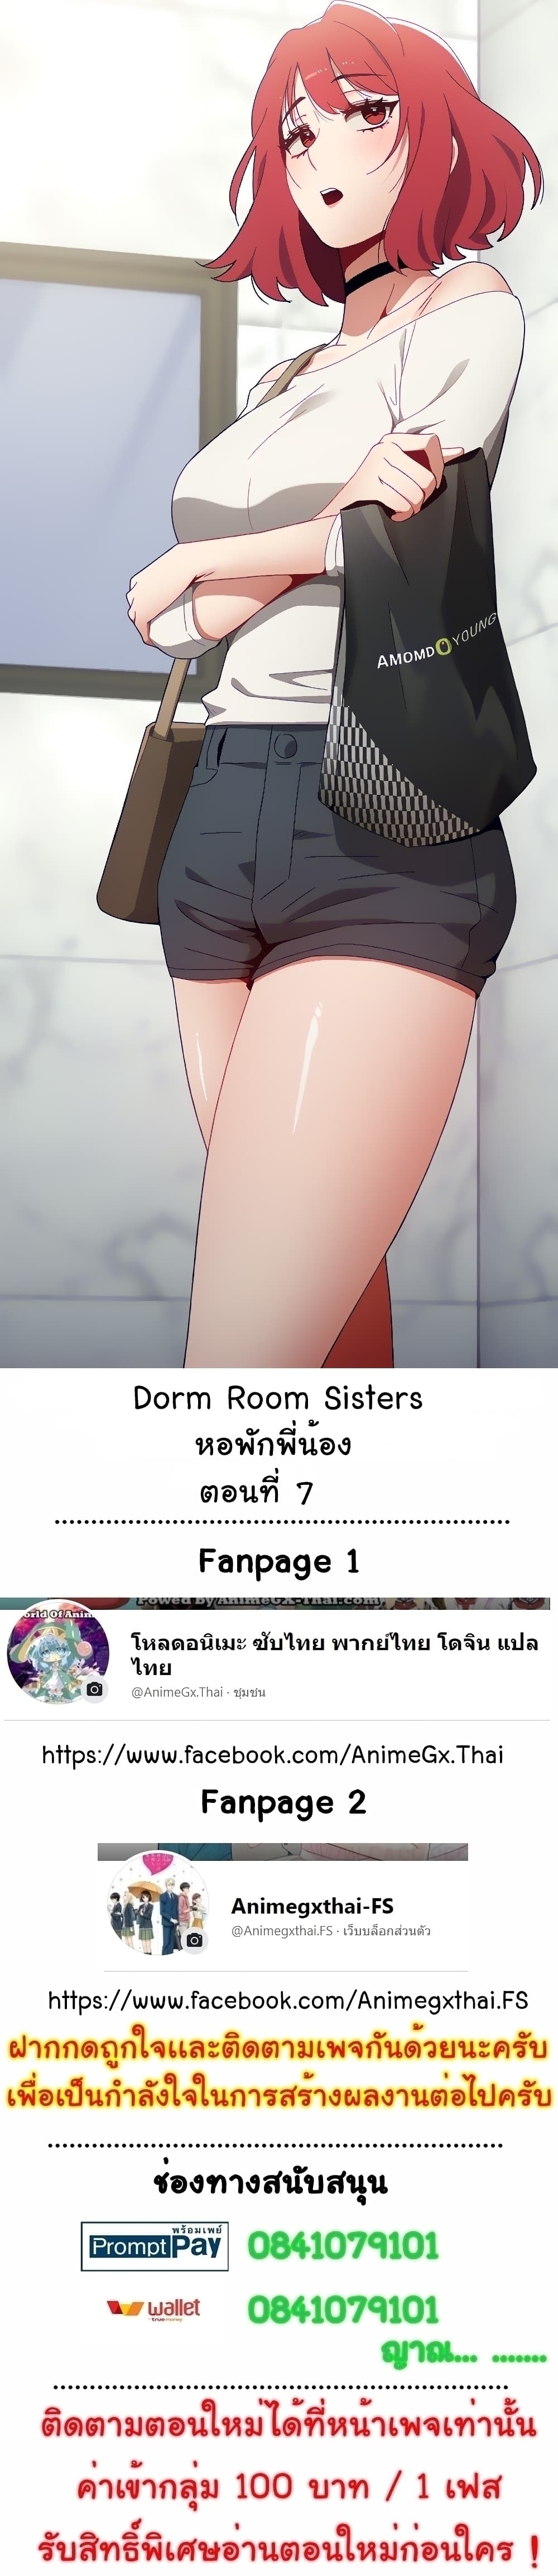 Dorm Room Sisters 7 01